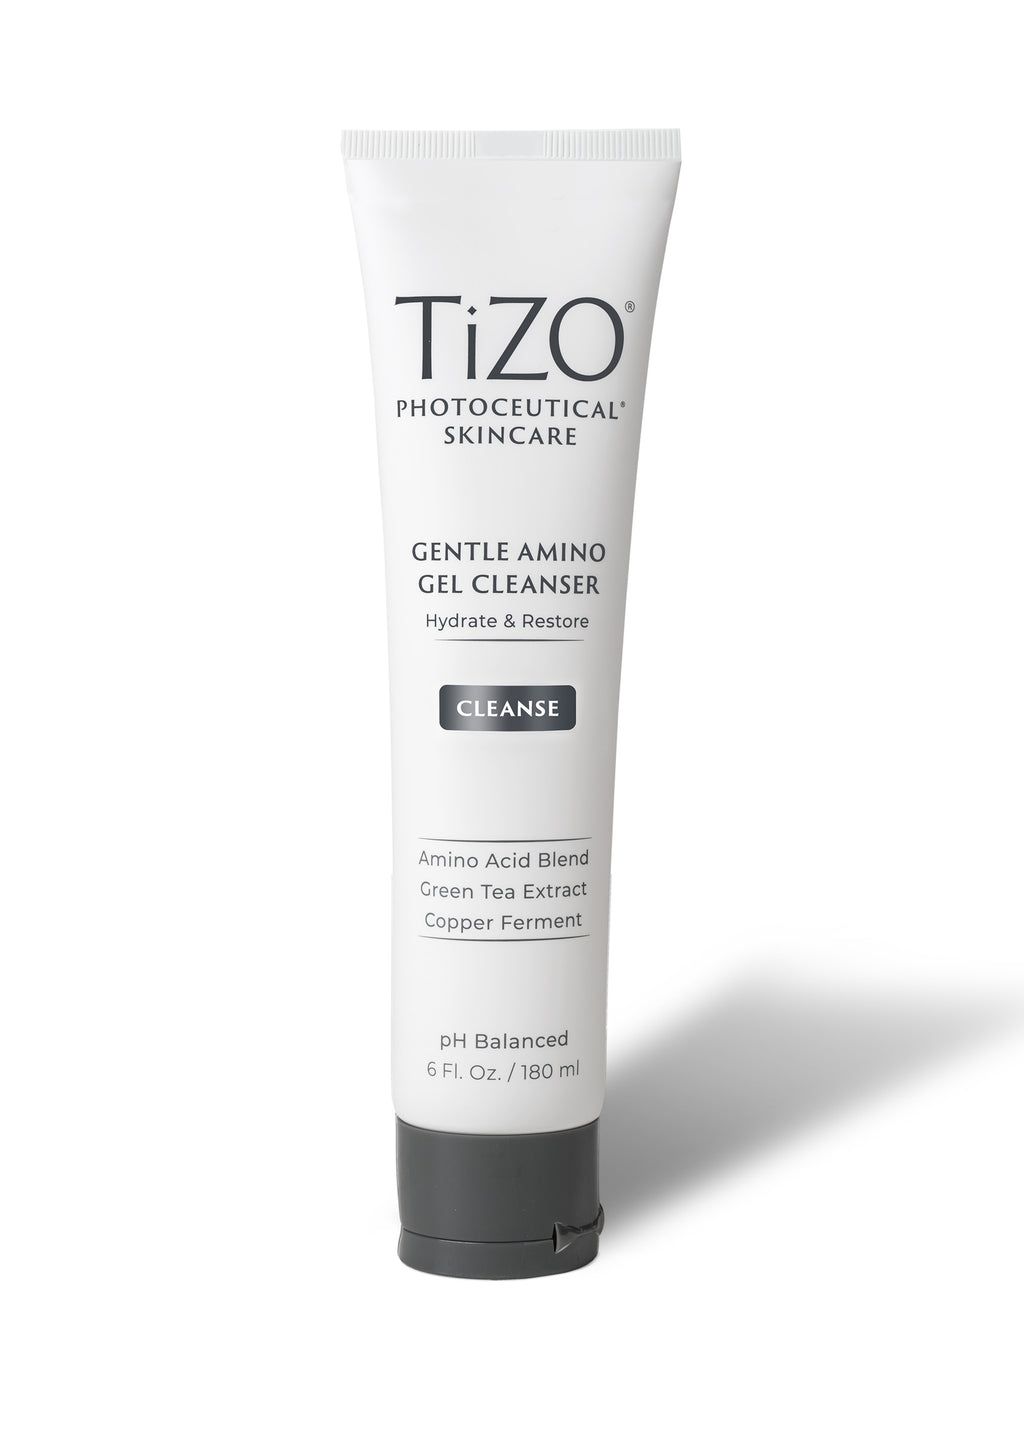 TiZO Photoceutical skincare gentle amino gel cleanser